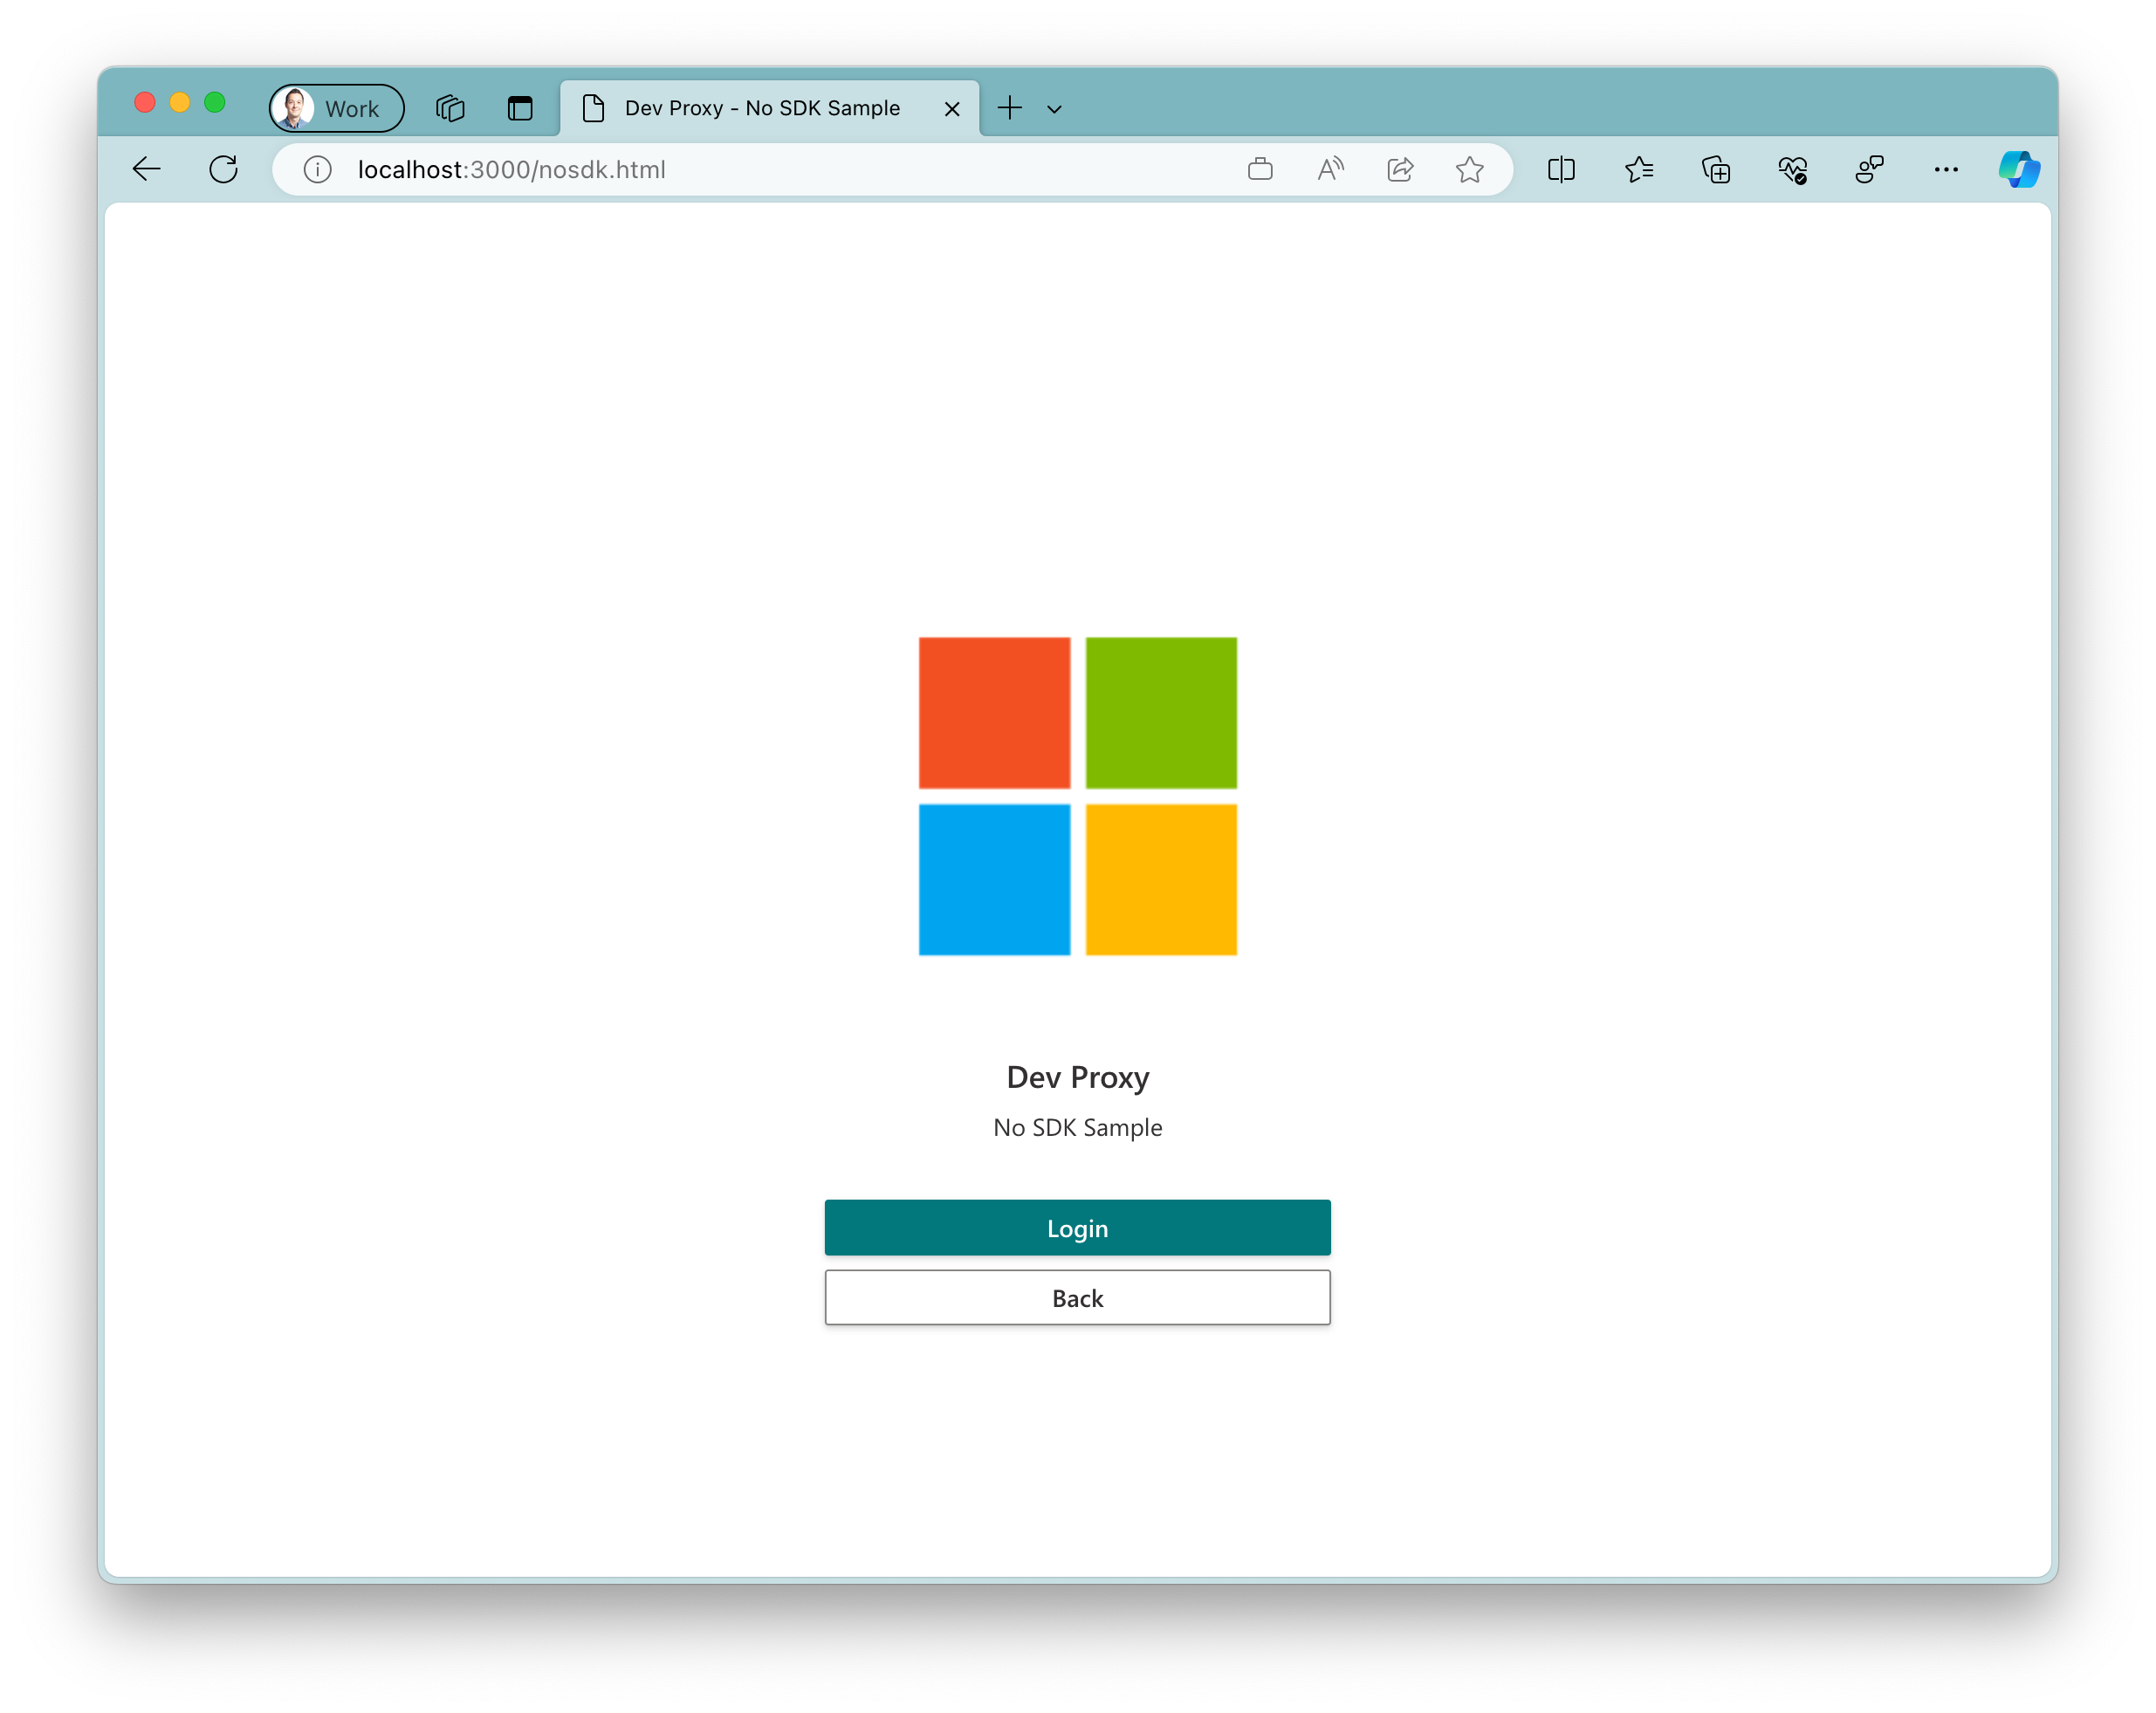 Windows 11 在 Microsoft Edge 浏览器中运行的示例应用的屏幕截图。应用显示一个大型 Microsoft 徽标，其下方有两个按钮。文本为“登录”的主按钮和文本为“Back”的辅助按钮。